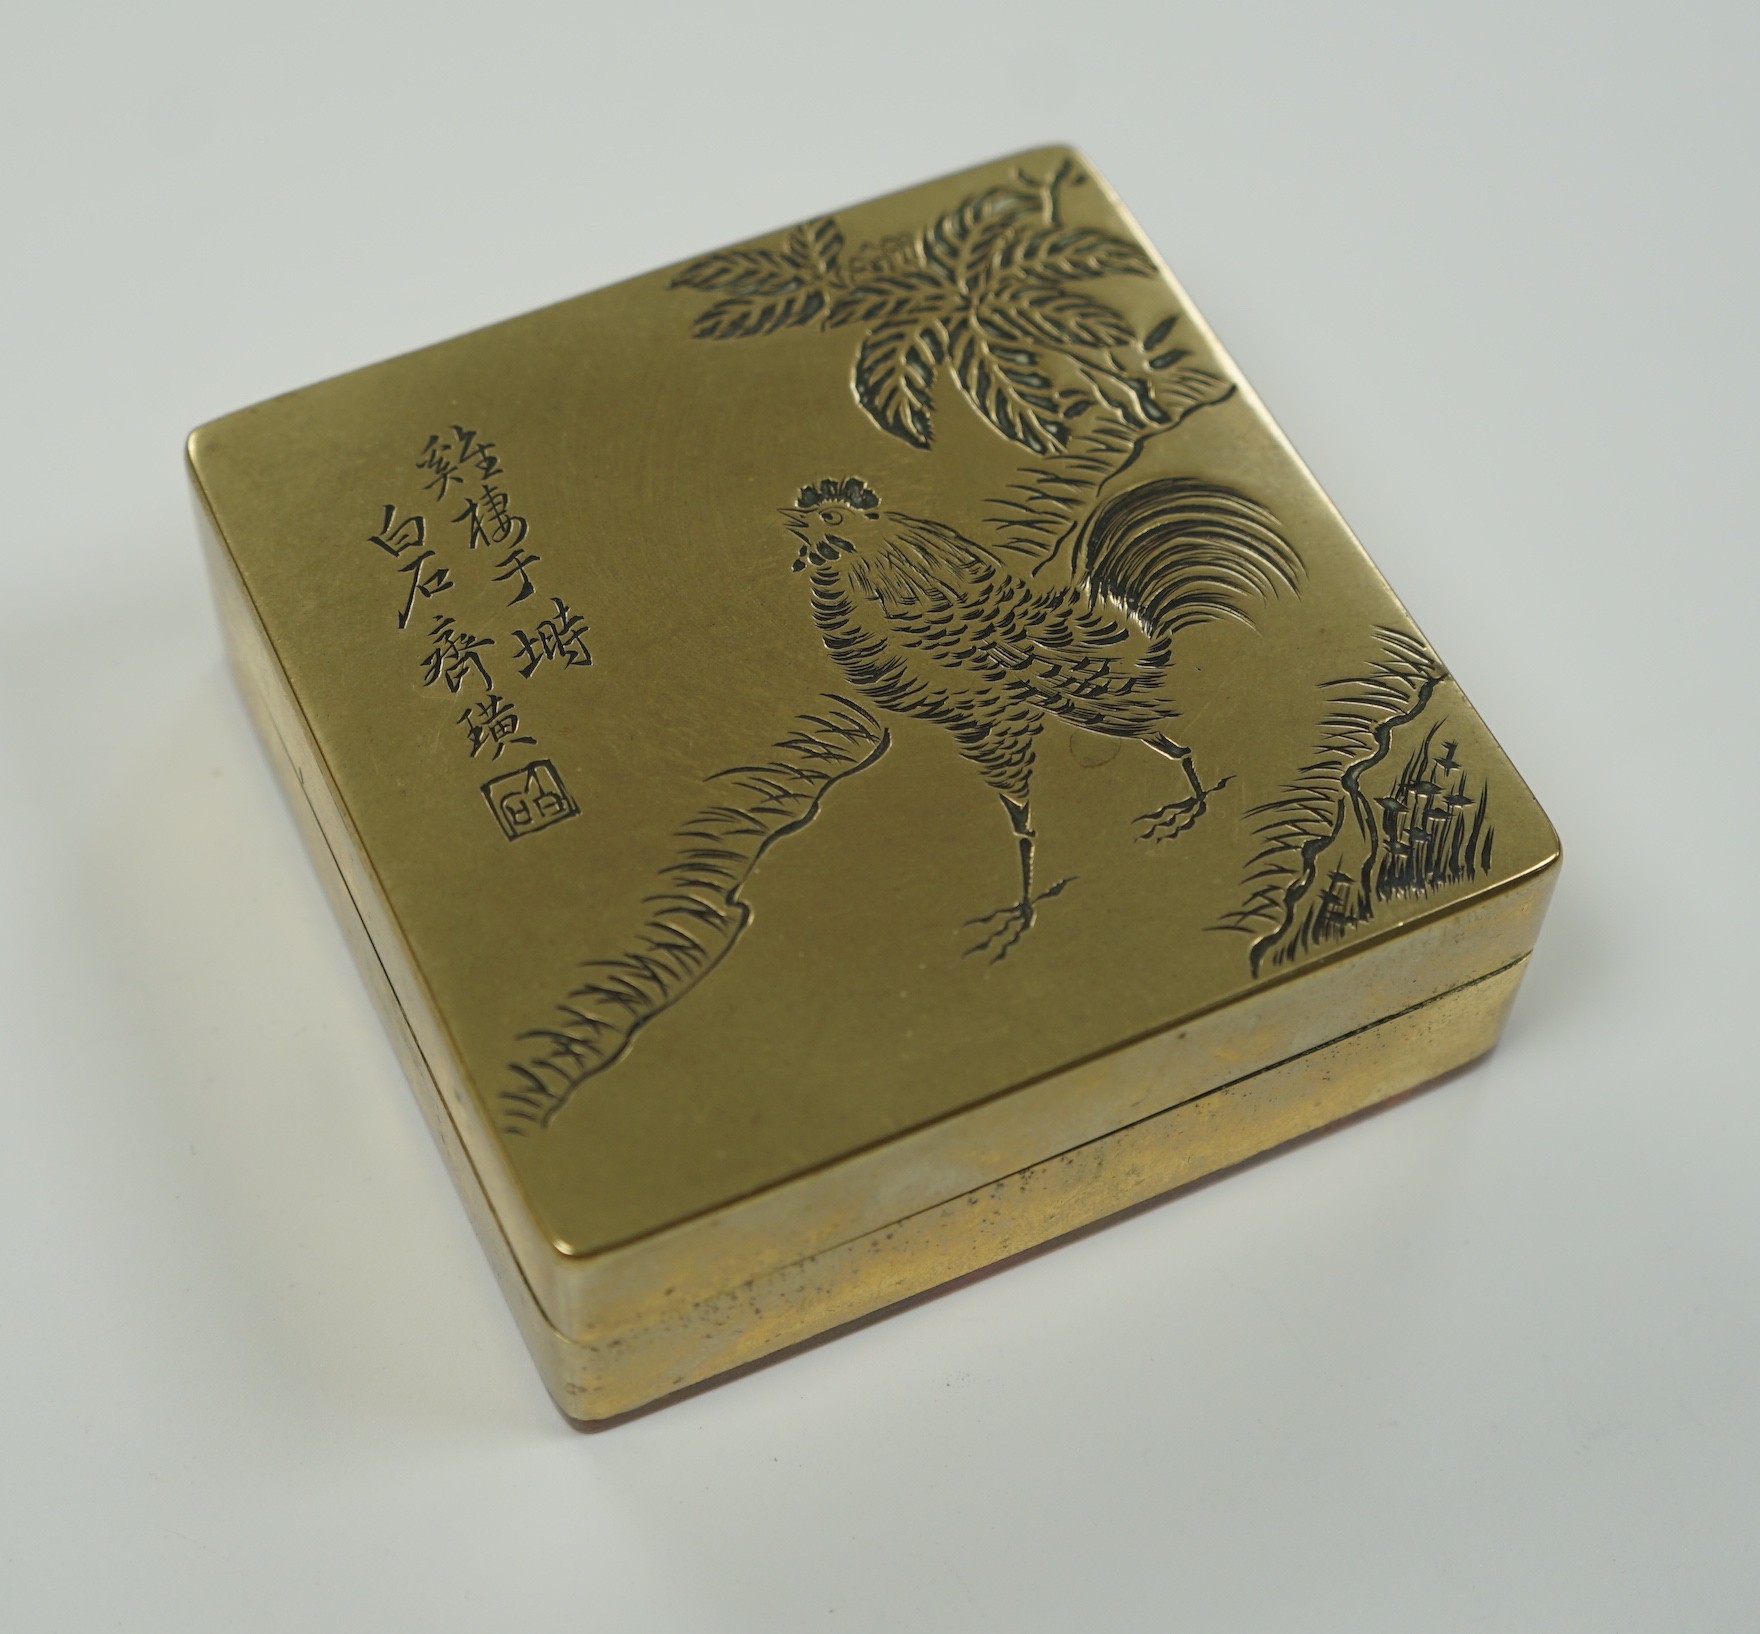 A Chinese paktong ink box, 9.5cm                                                                                                                                                                                            